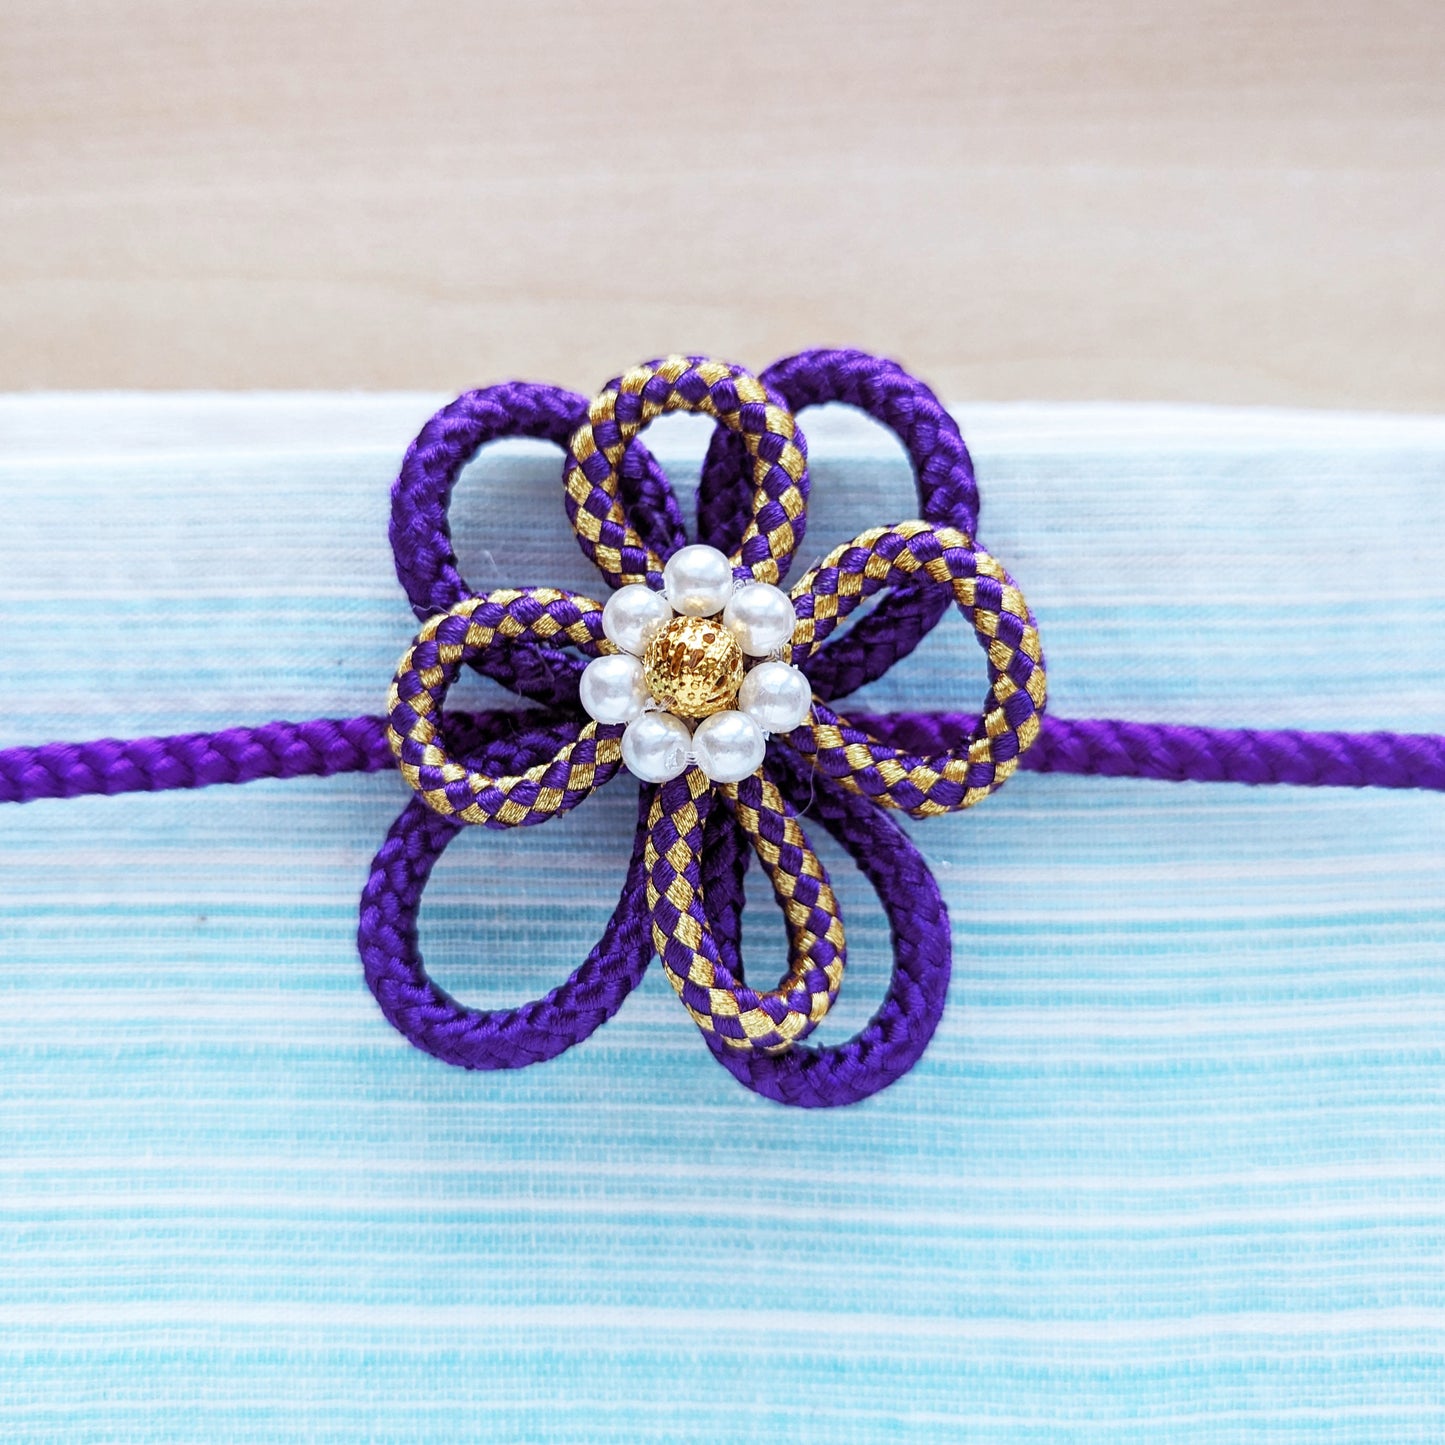 Japanese Kazari Himo - Purple Flower Knot